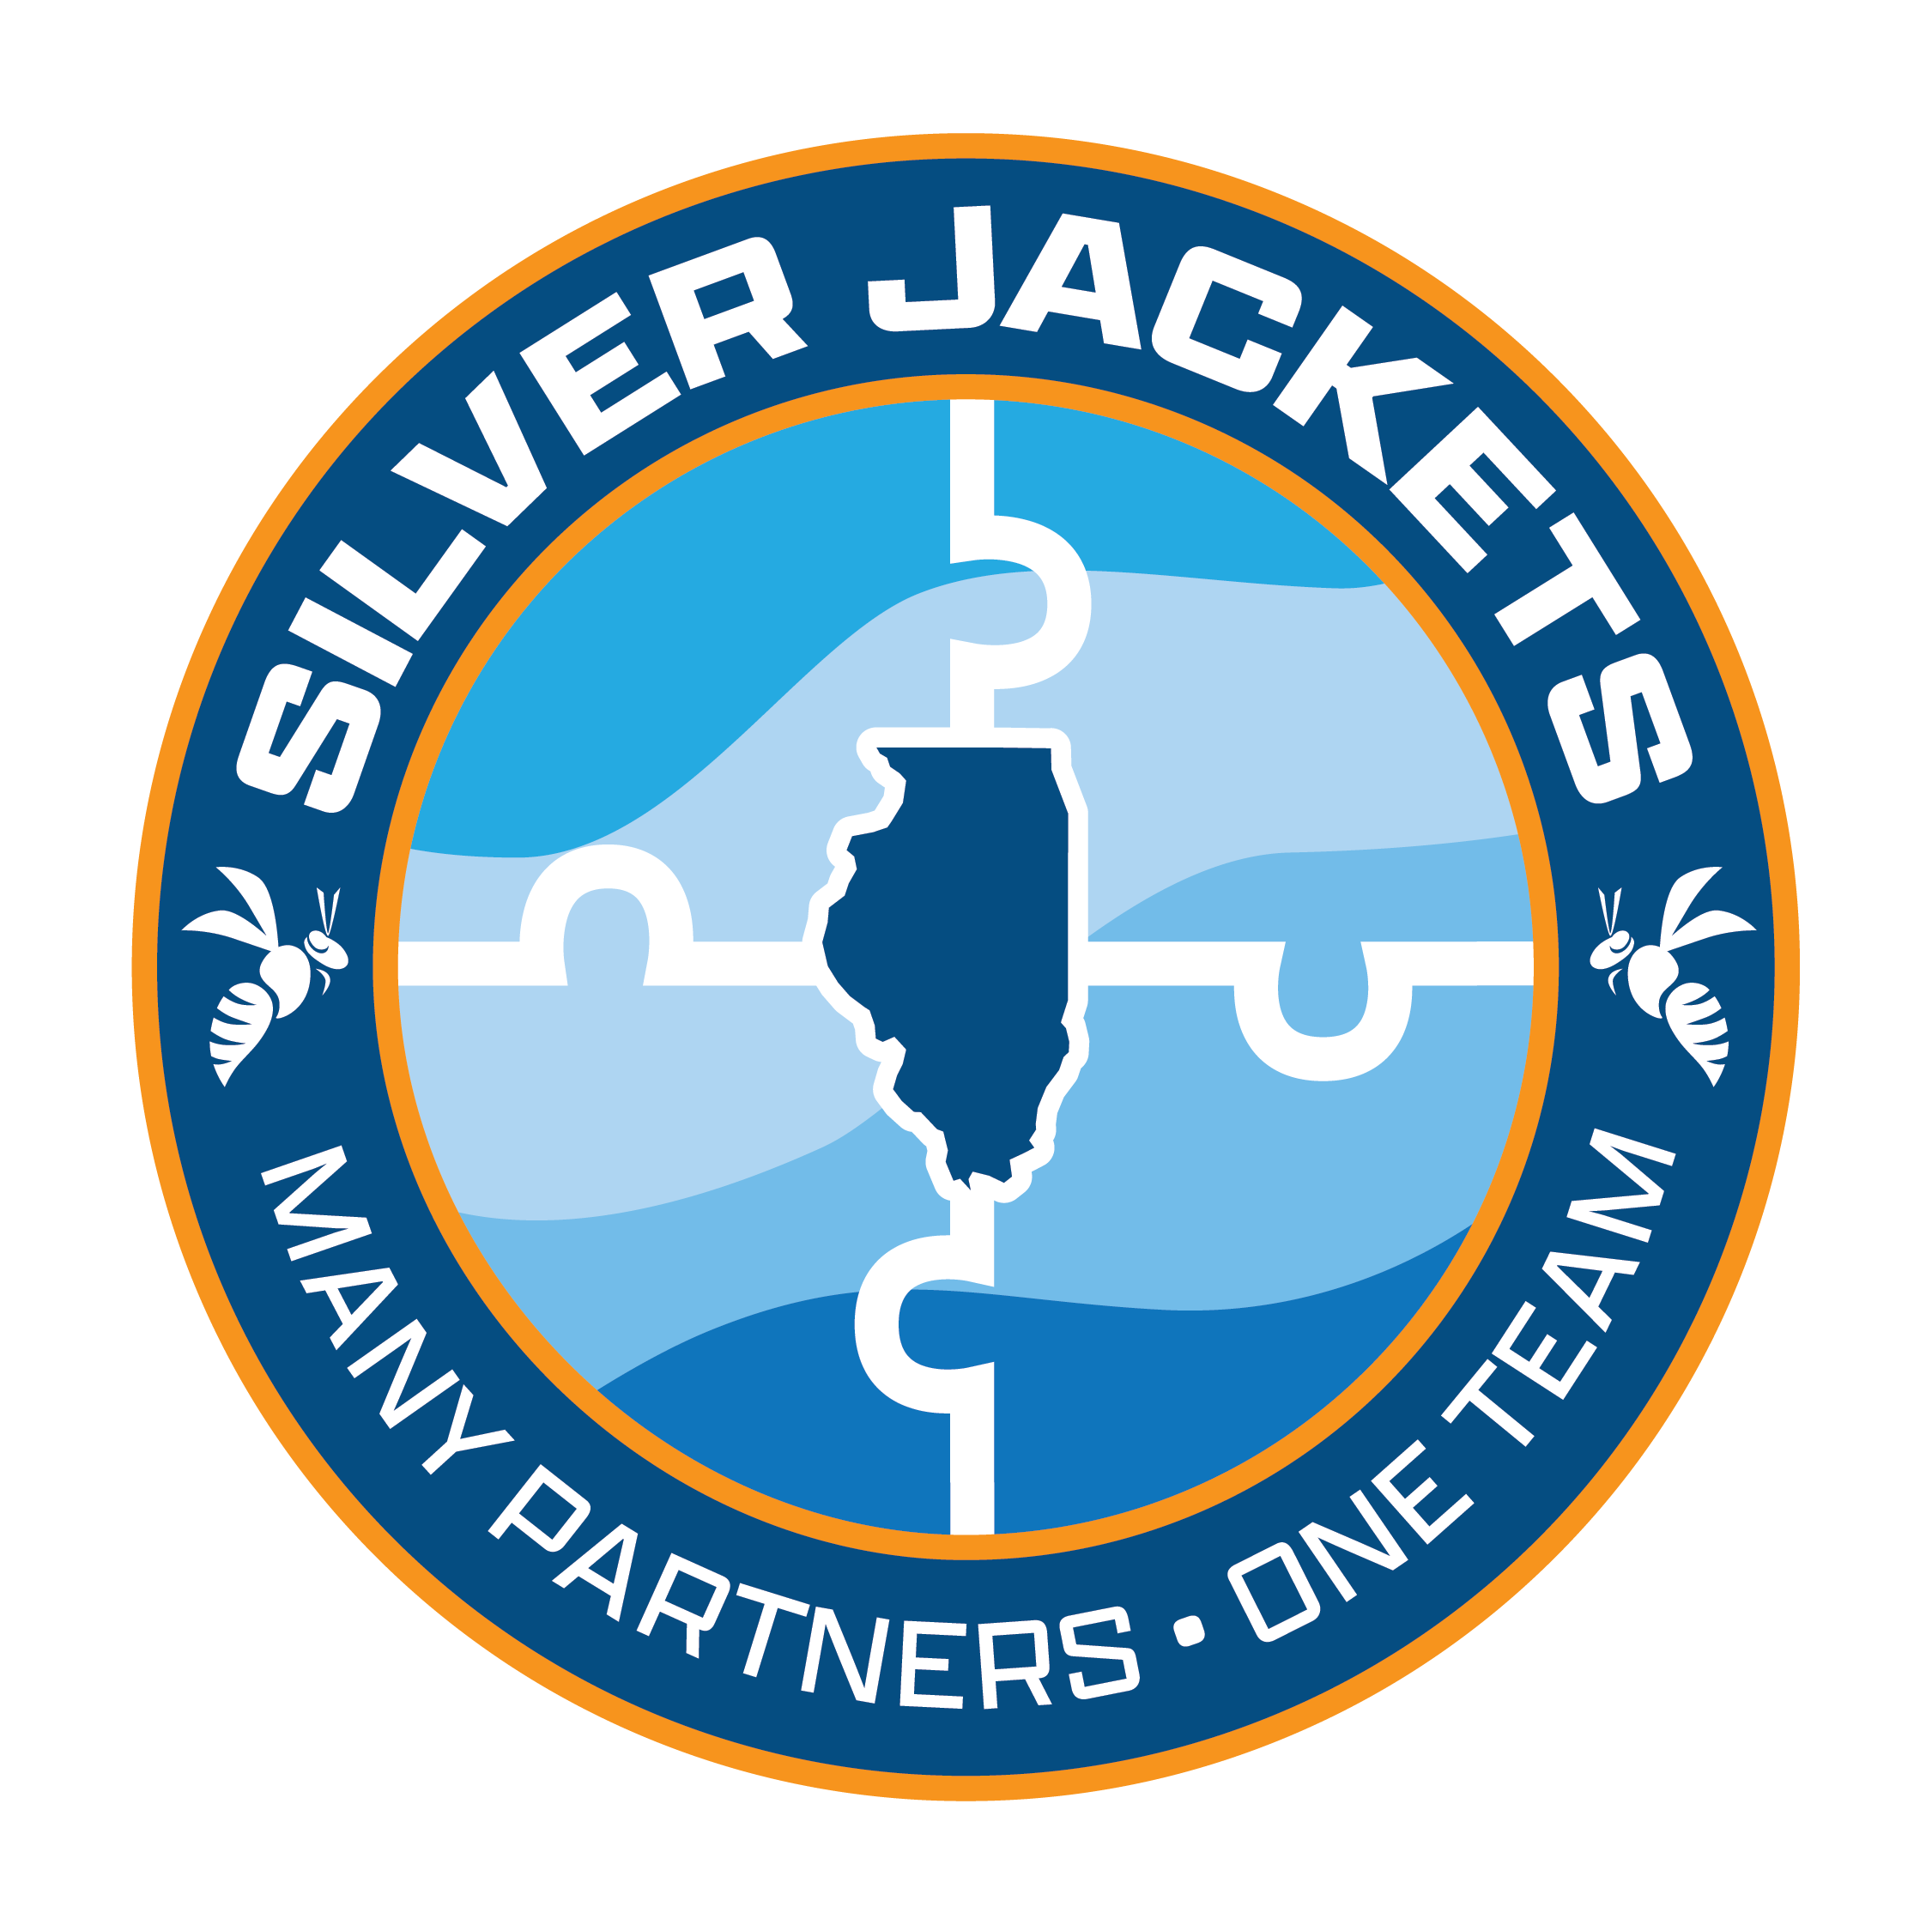 Illinois Silver Jackets logo